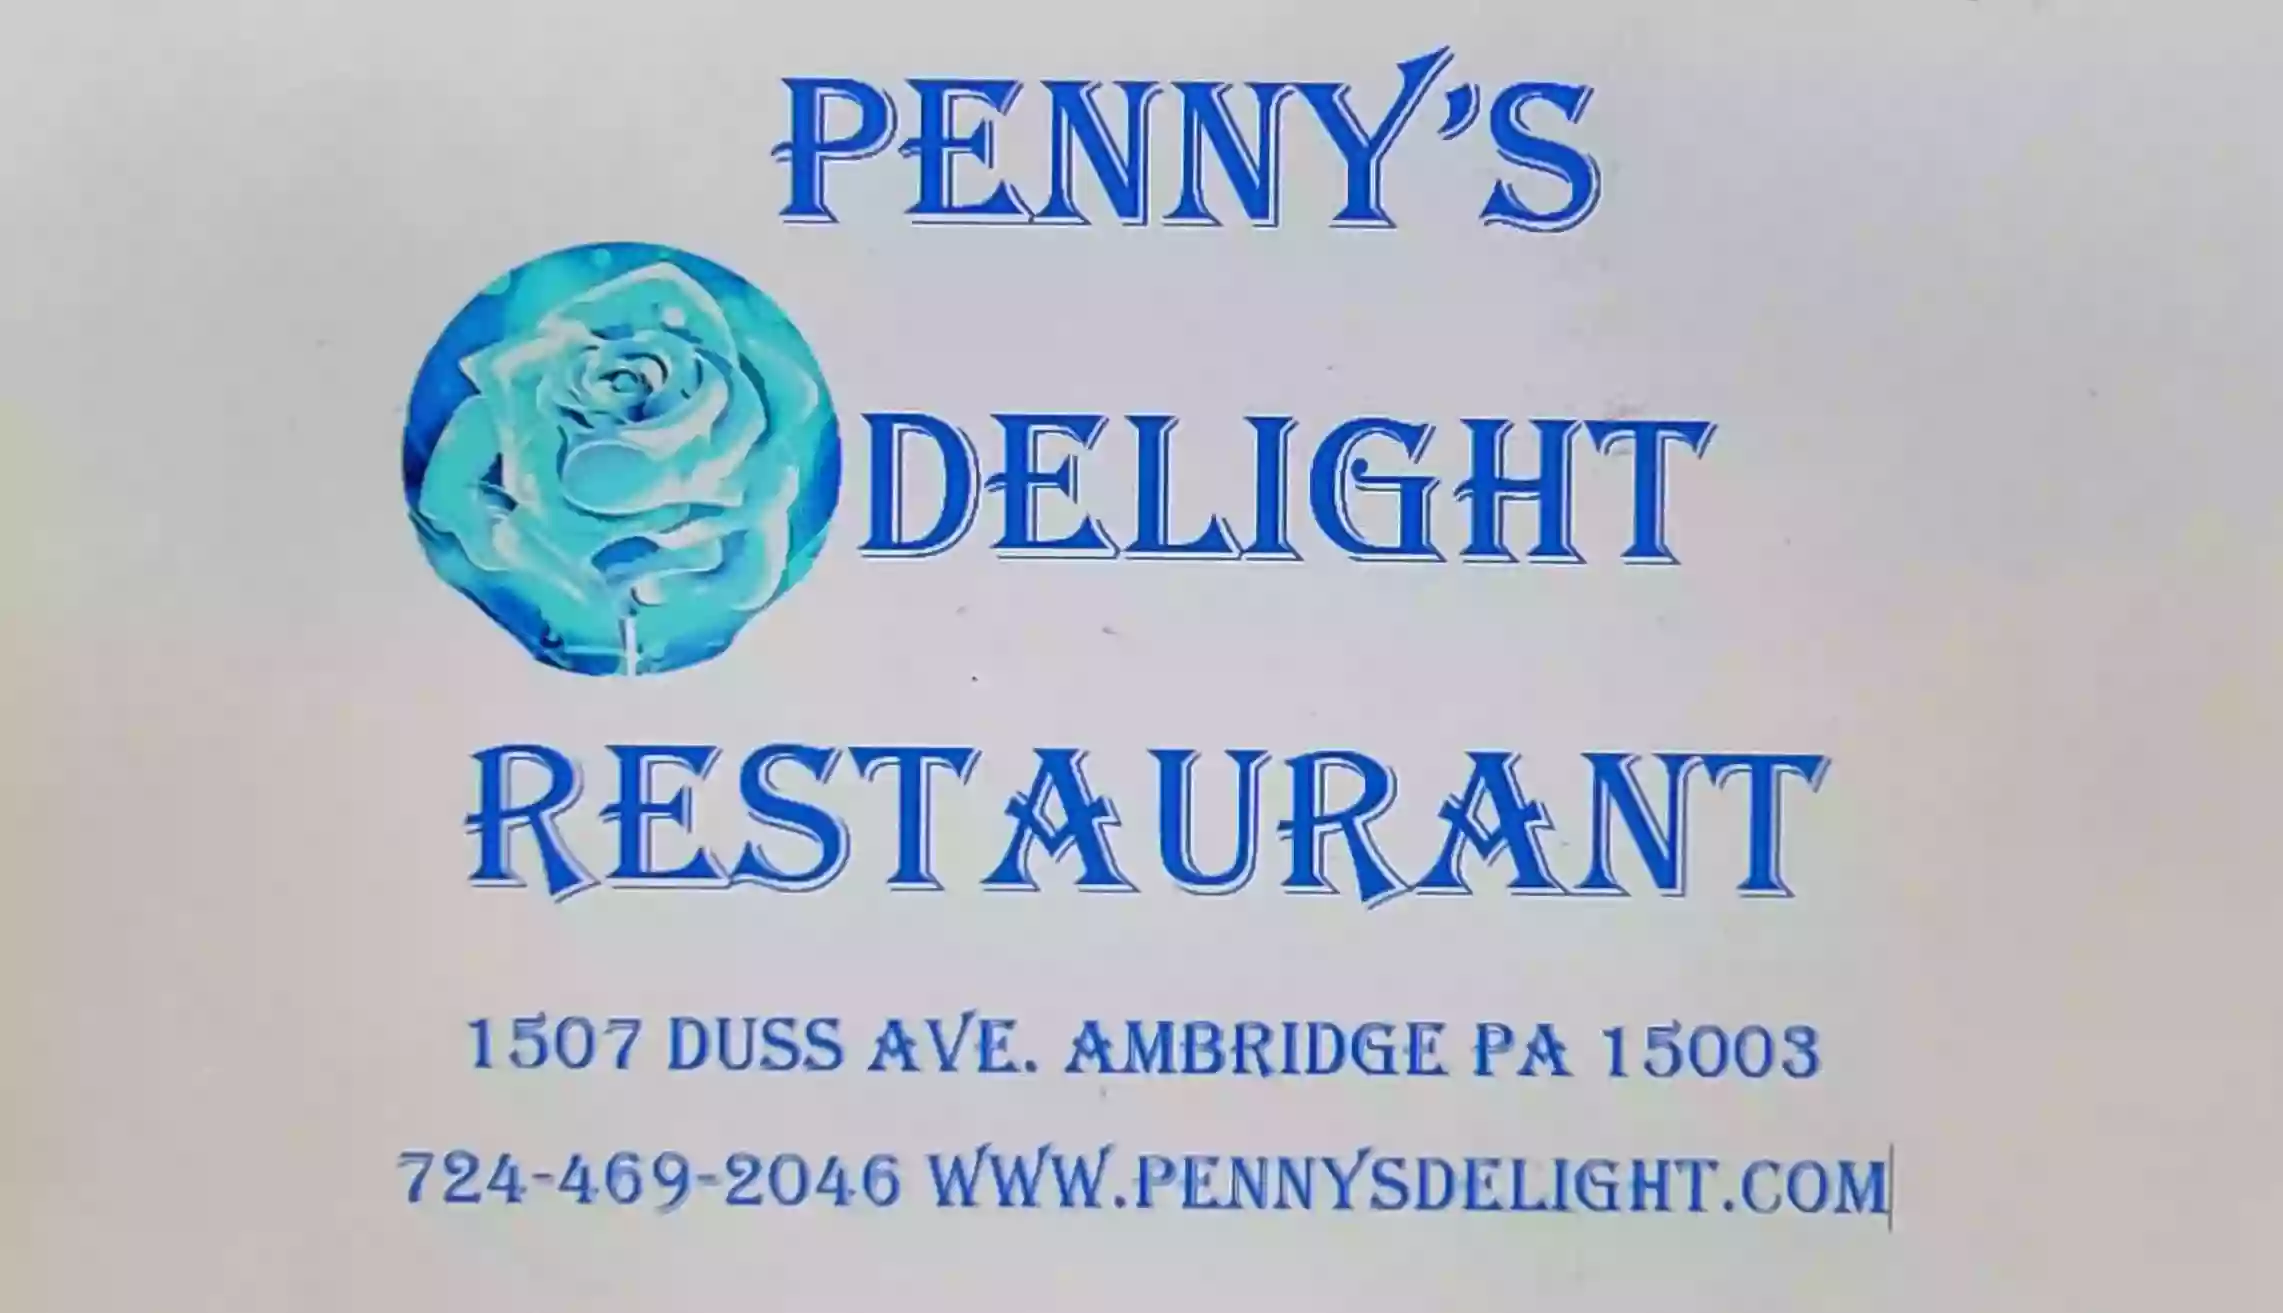 Penny's Delight